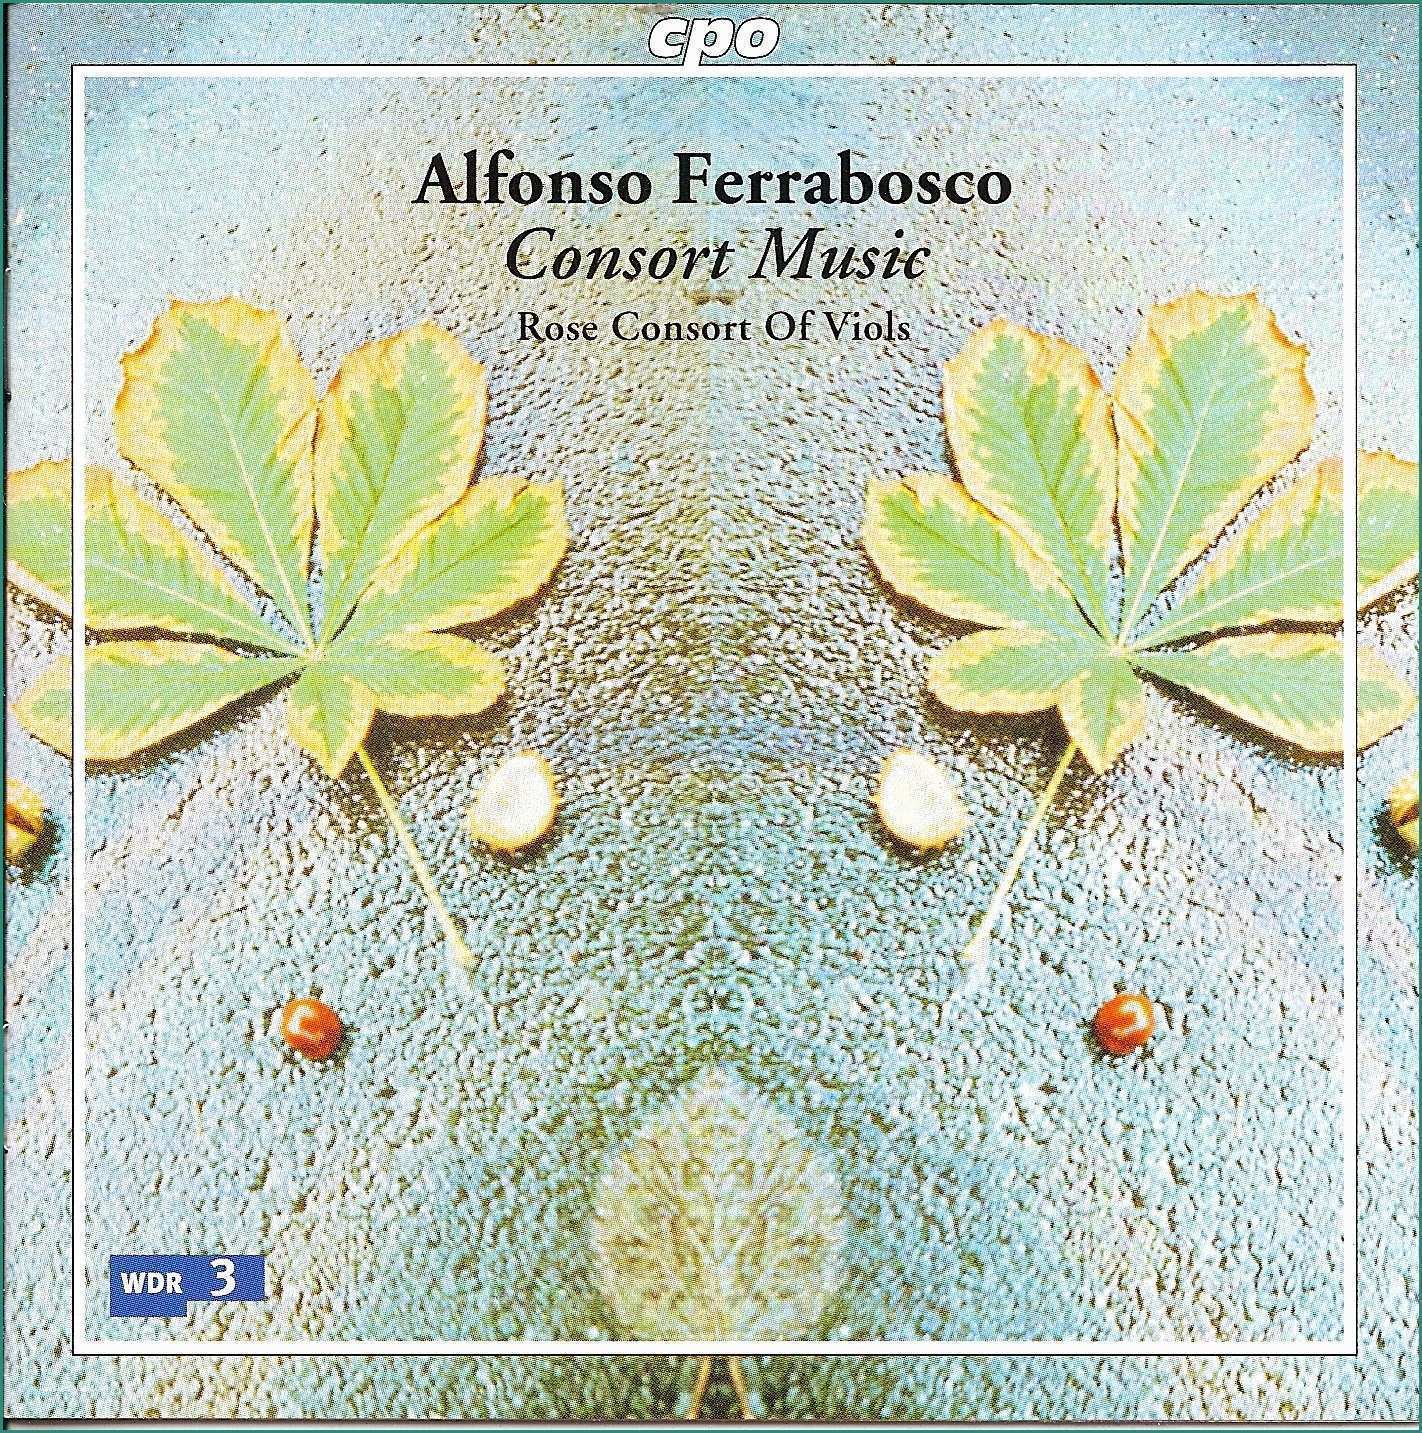 Suite A Tema Milano E Kammermusikkammer Alfonso Ferrabosco Consort Music Rose Consort